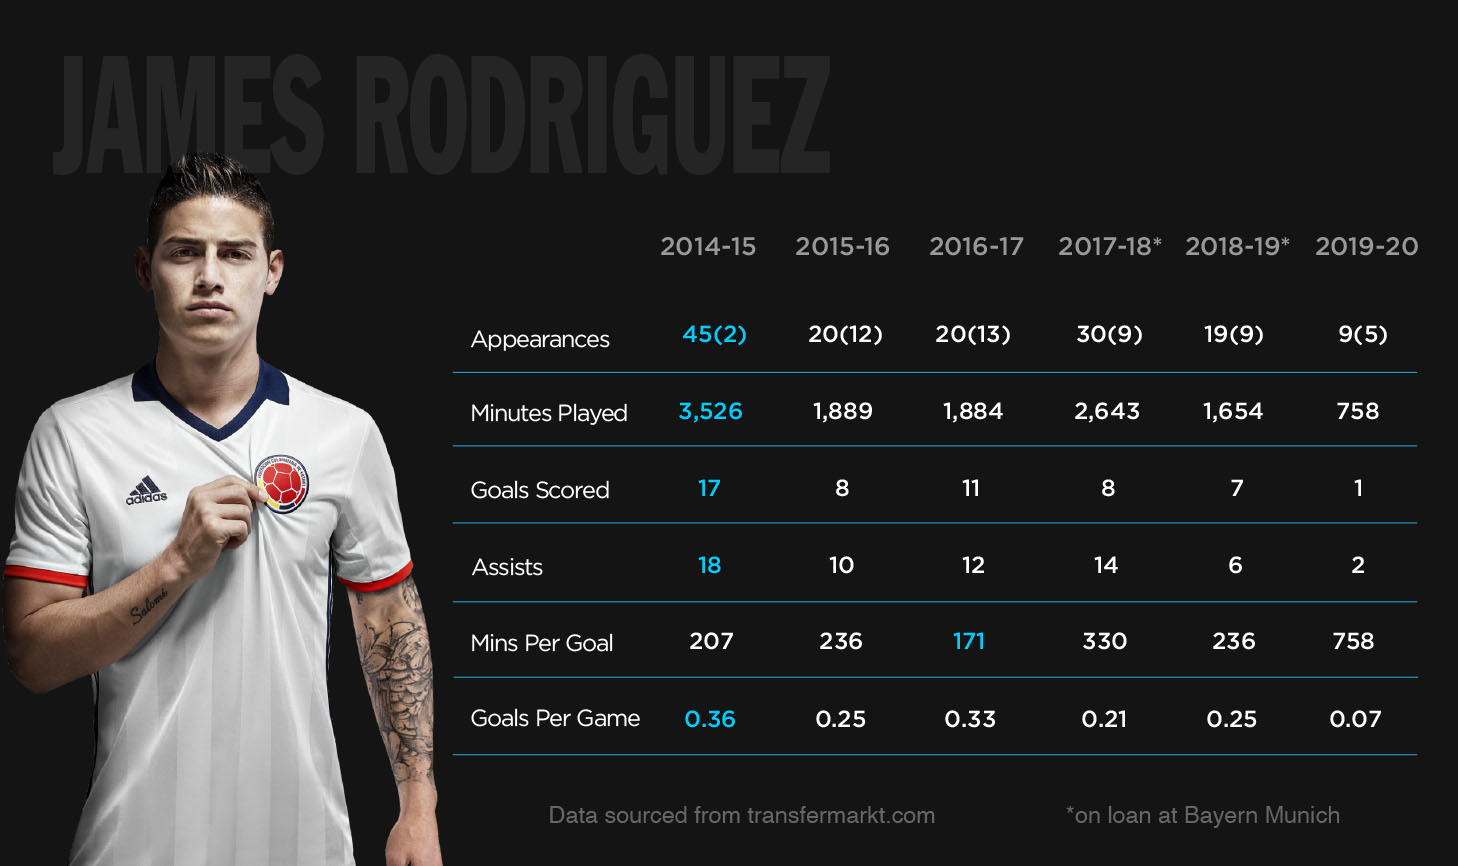 James Rodriguez career stats